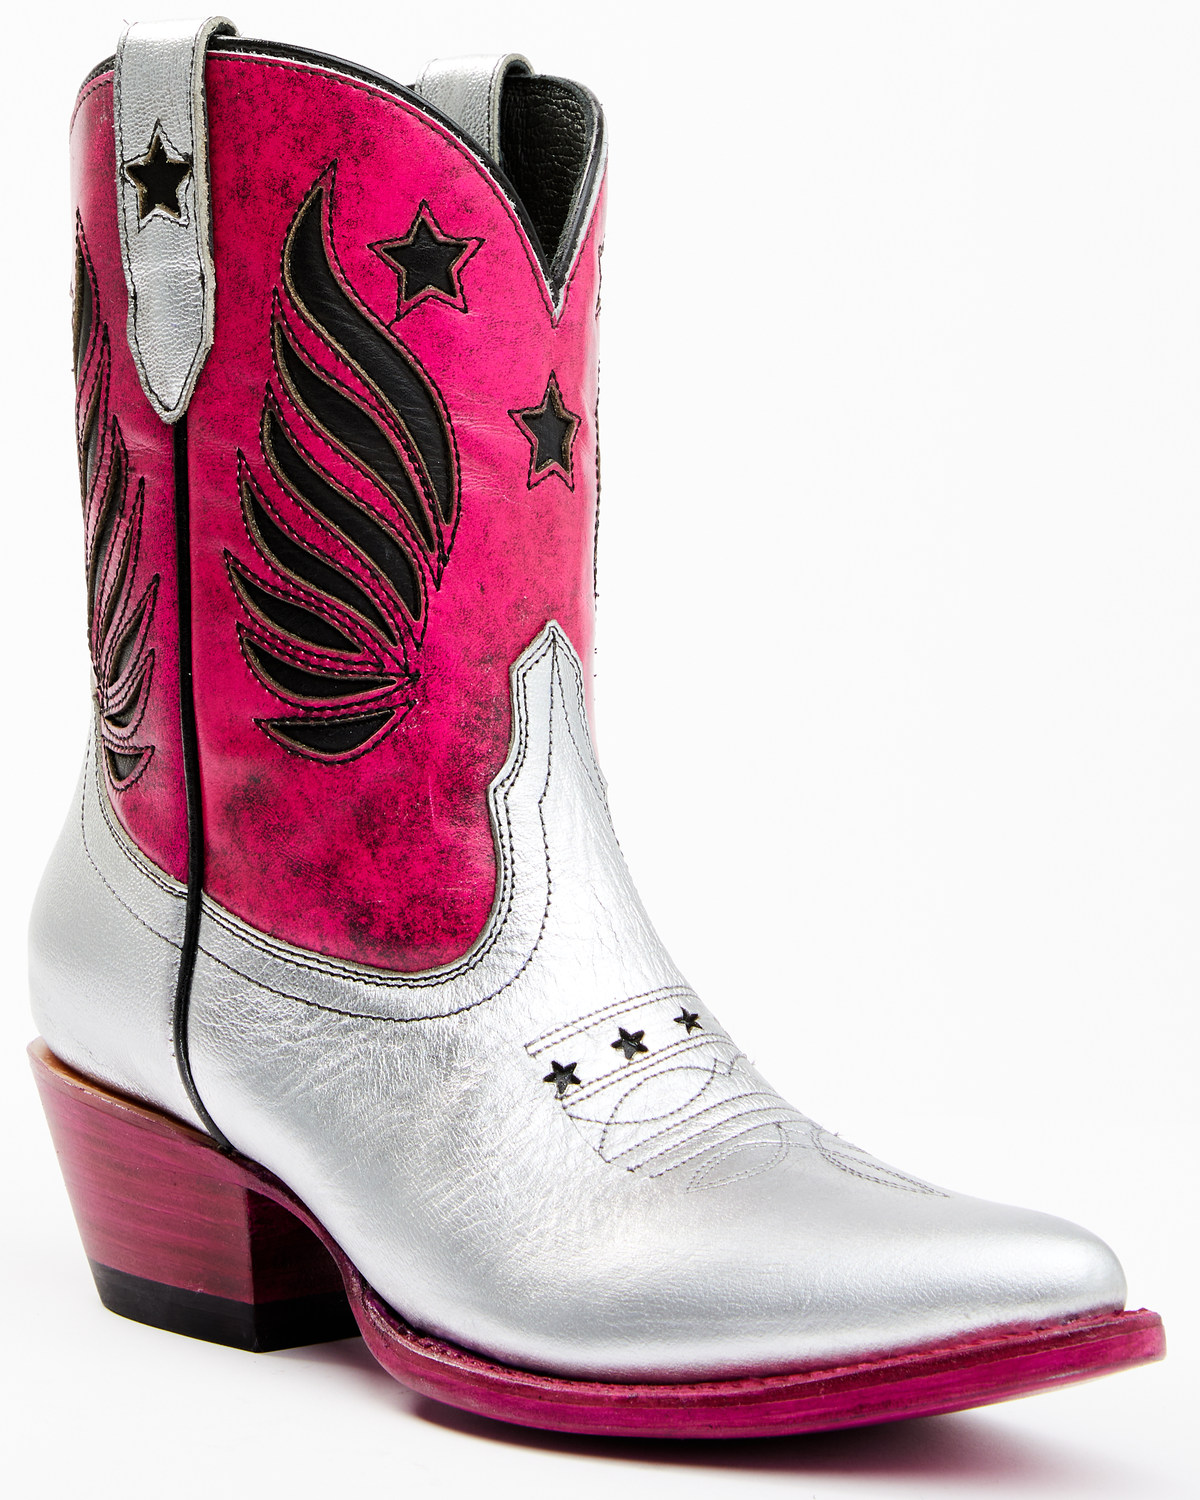 Idyllwind Women's Metallic Star Inlay Roadie Western Booties - Pointed Toe